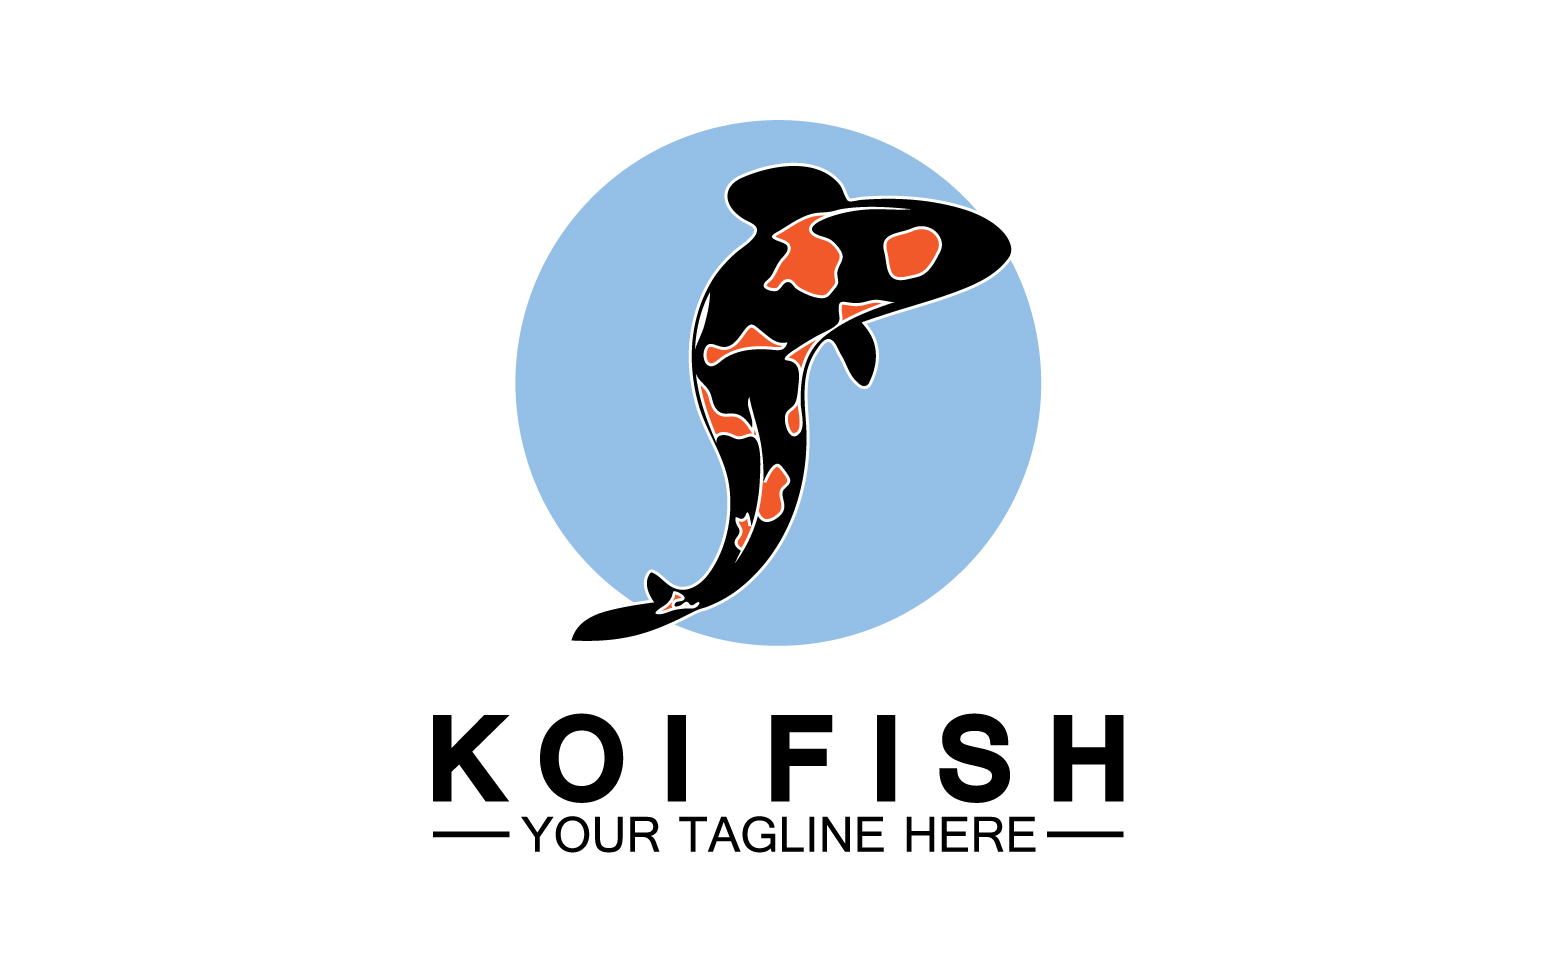 Fish koi black and red icon logo vector v26